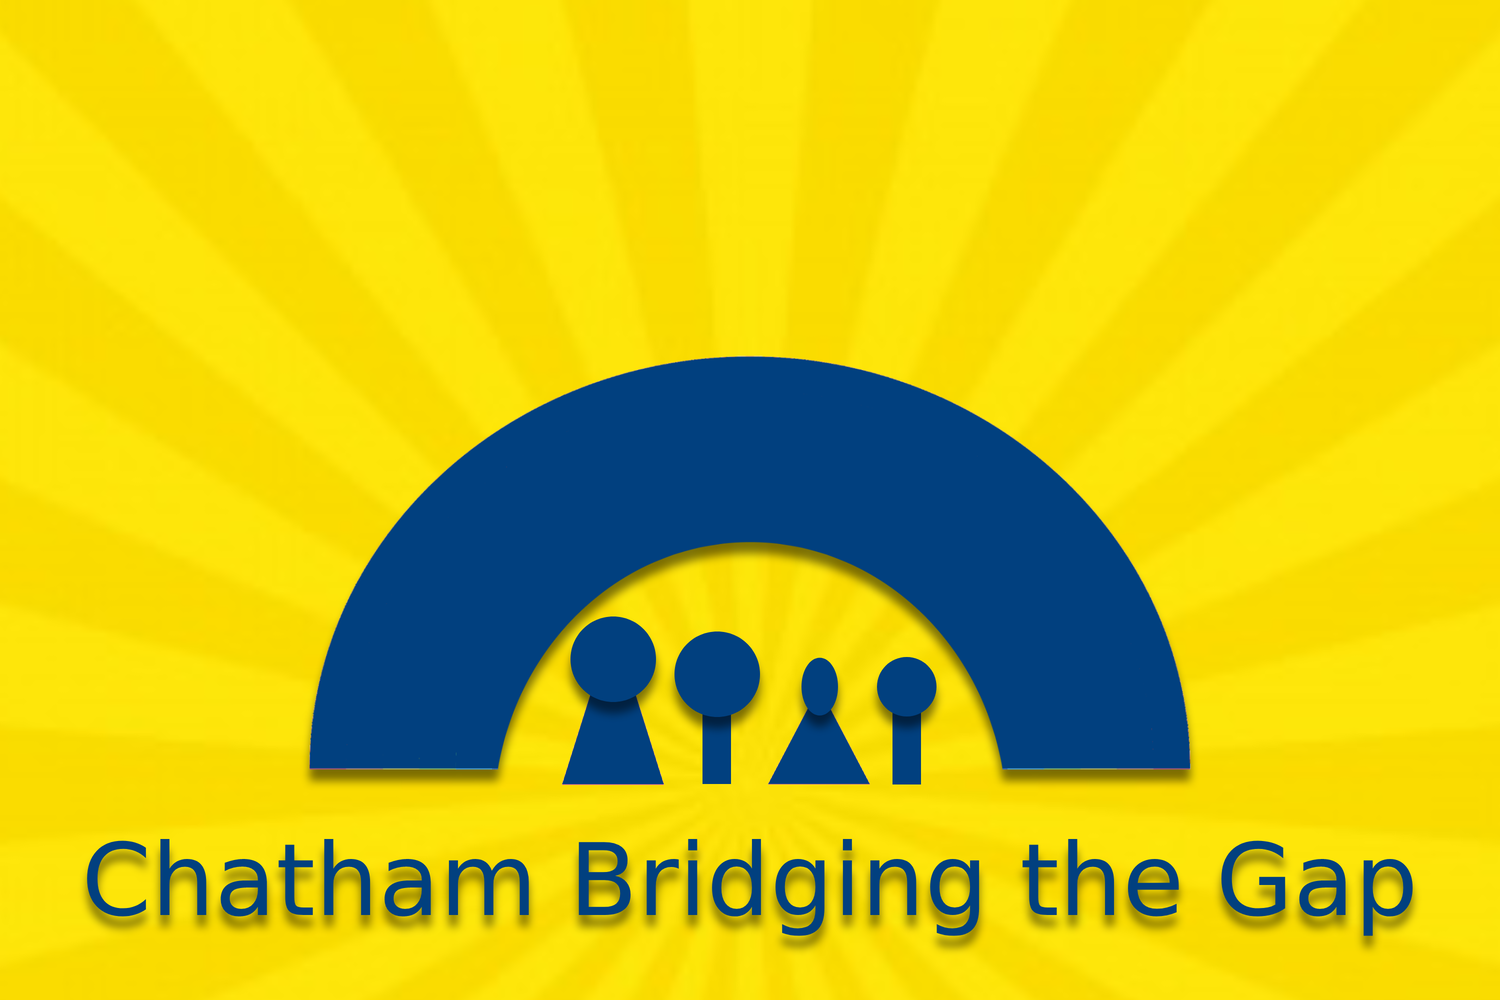 Chatham Bridging the Gap